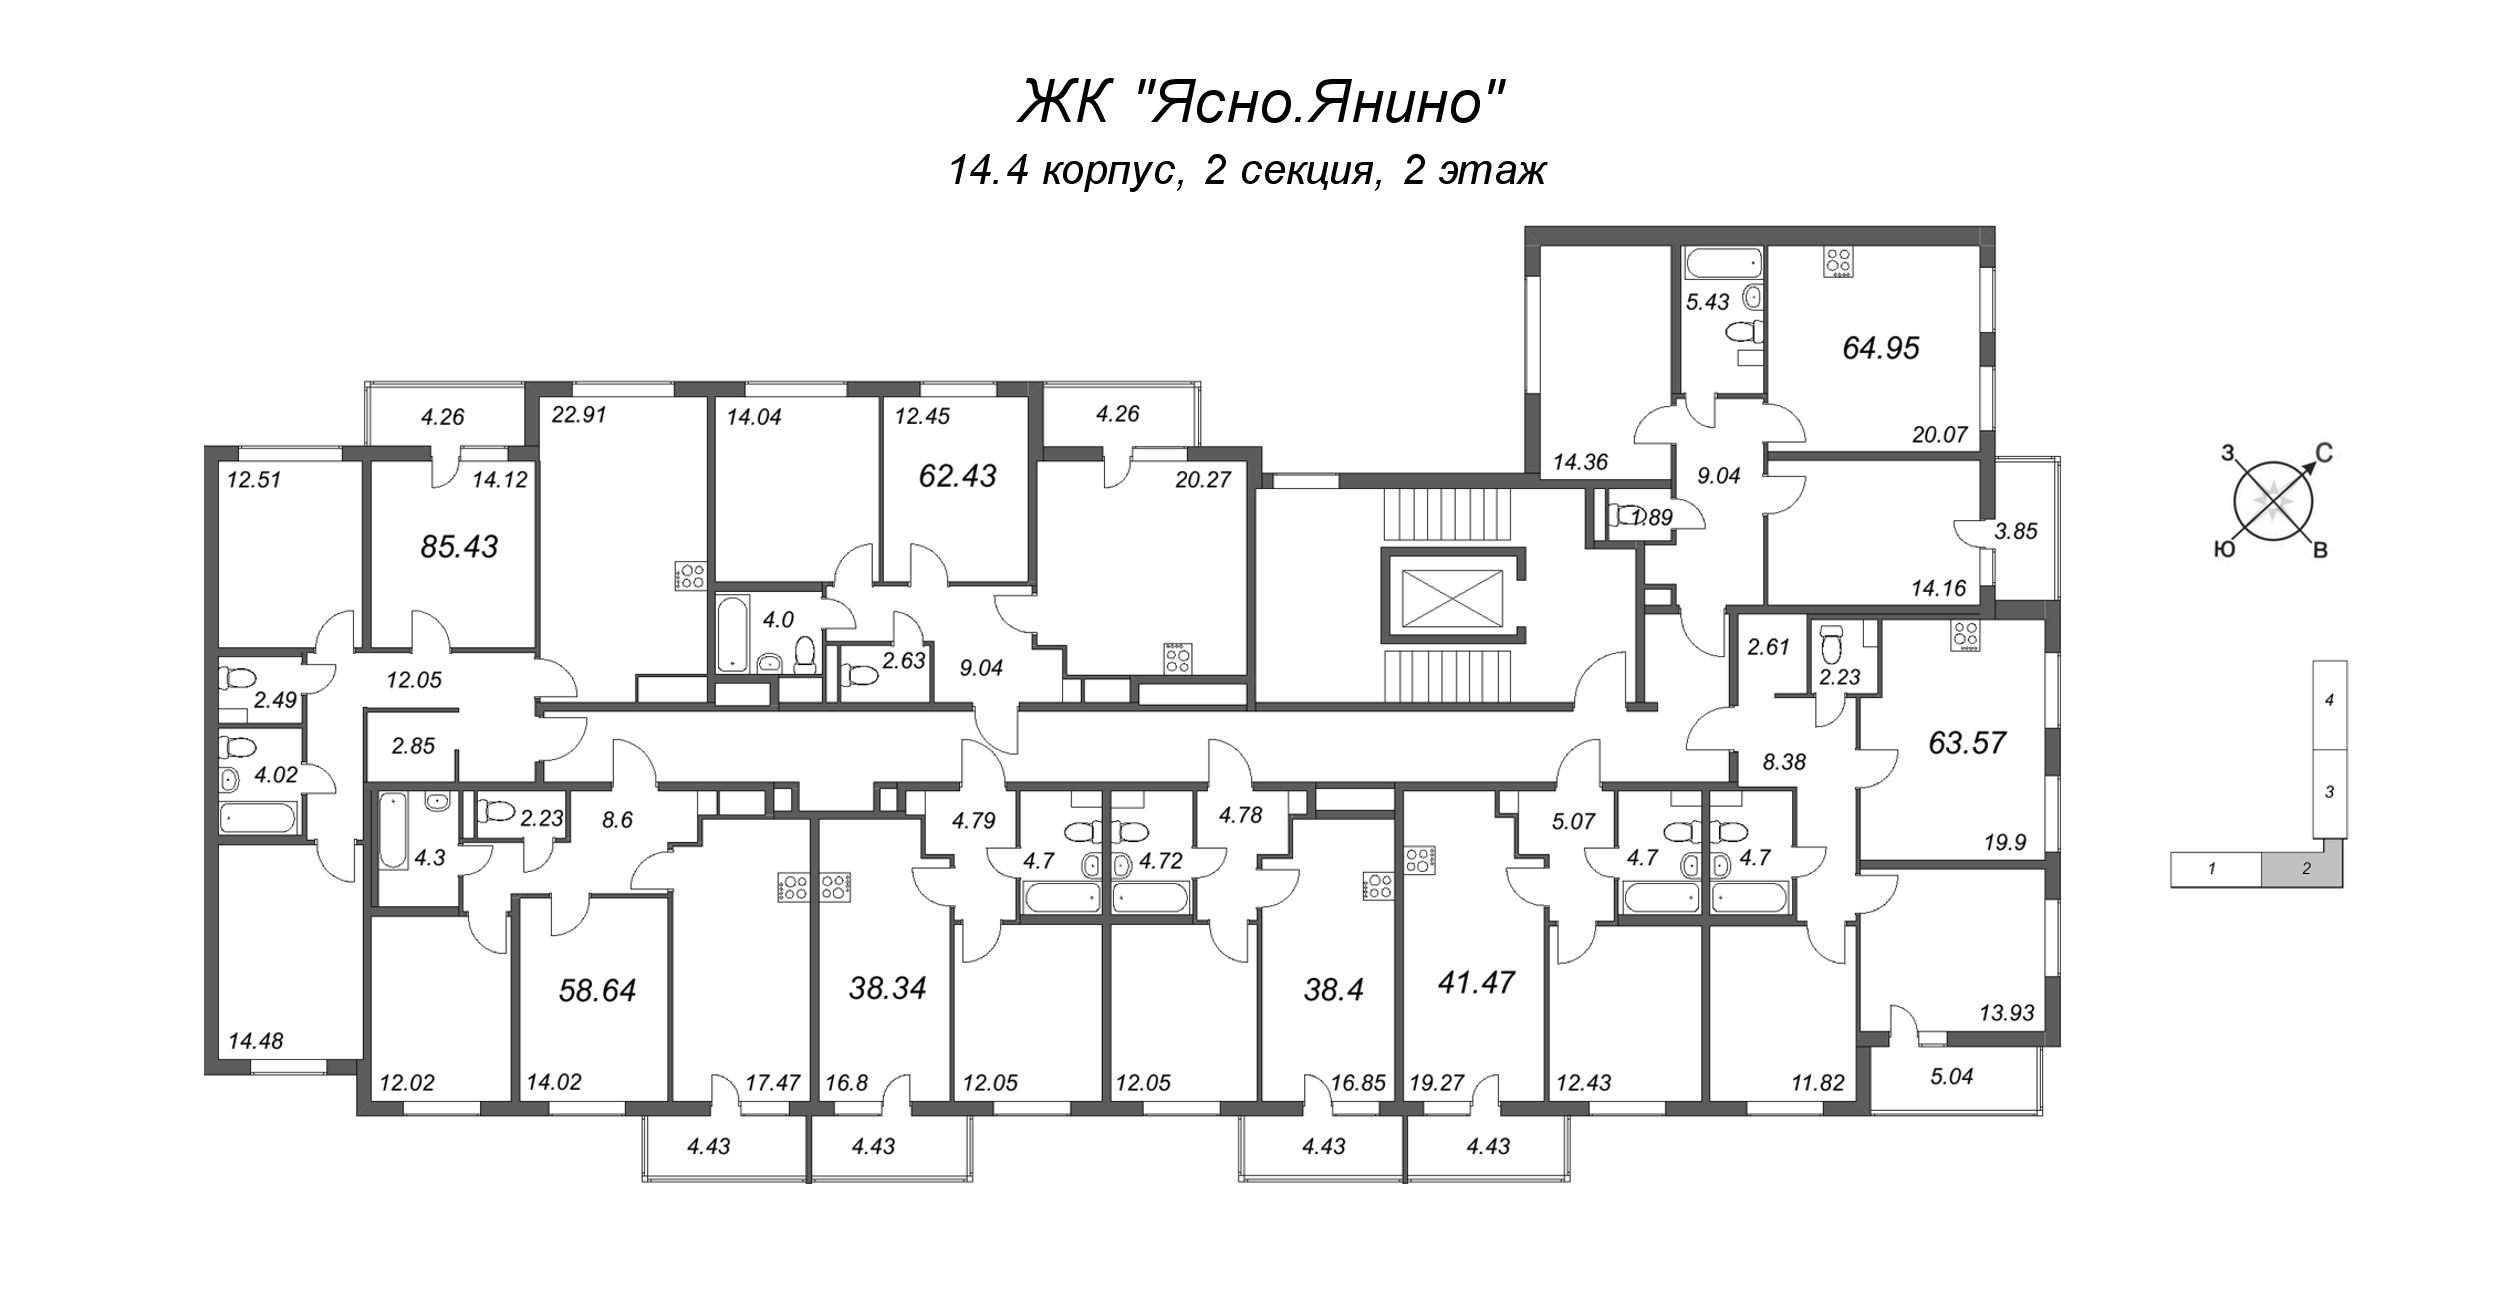 3-комнатная (Евро) квартира, 63.57 м² в ЖК "Ясно.Янино" - планировка этажа